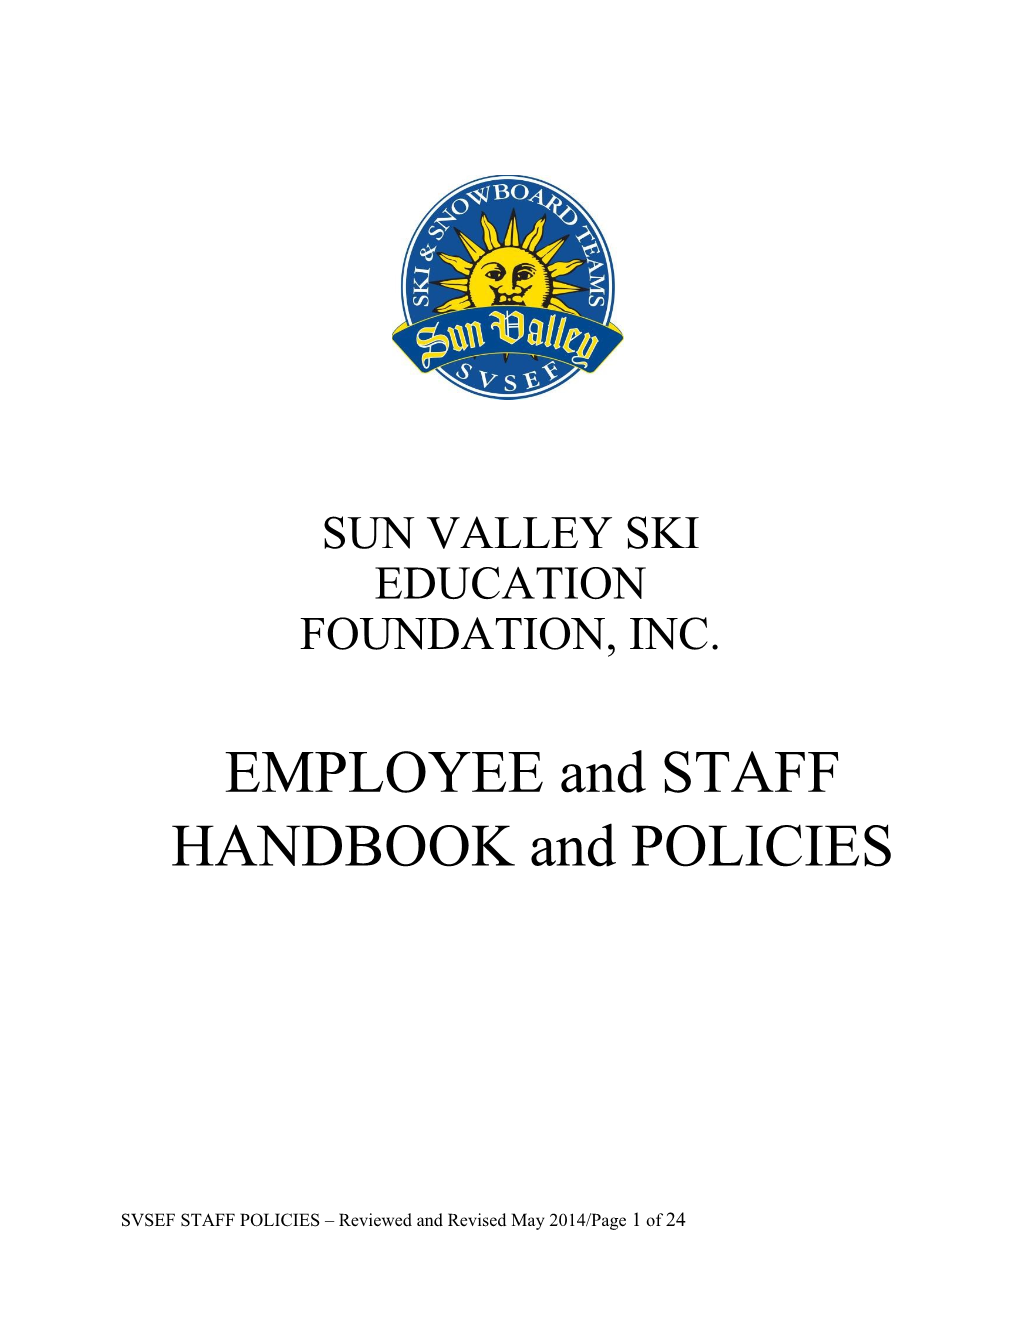 Sun Valley Ski Education Foundation, Inc. Staff Policies